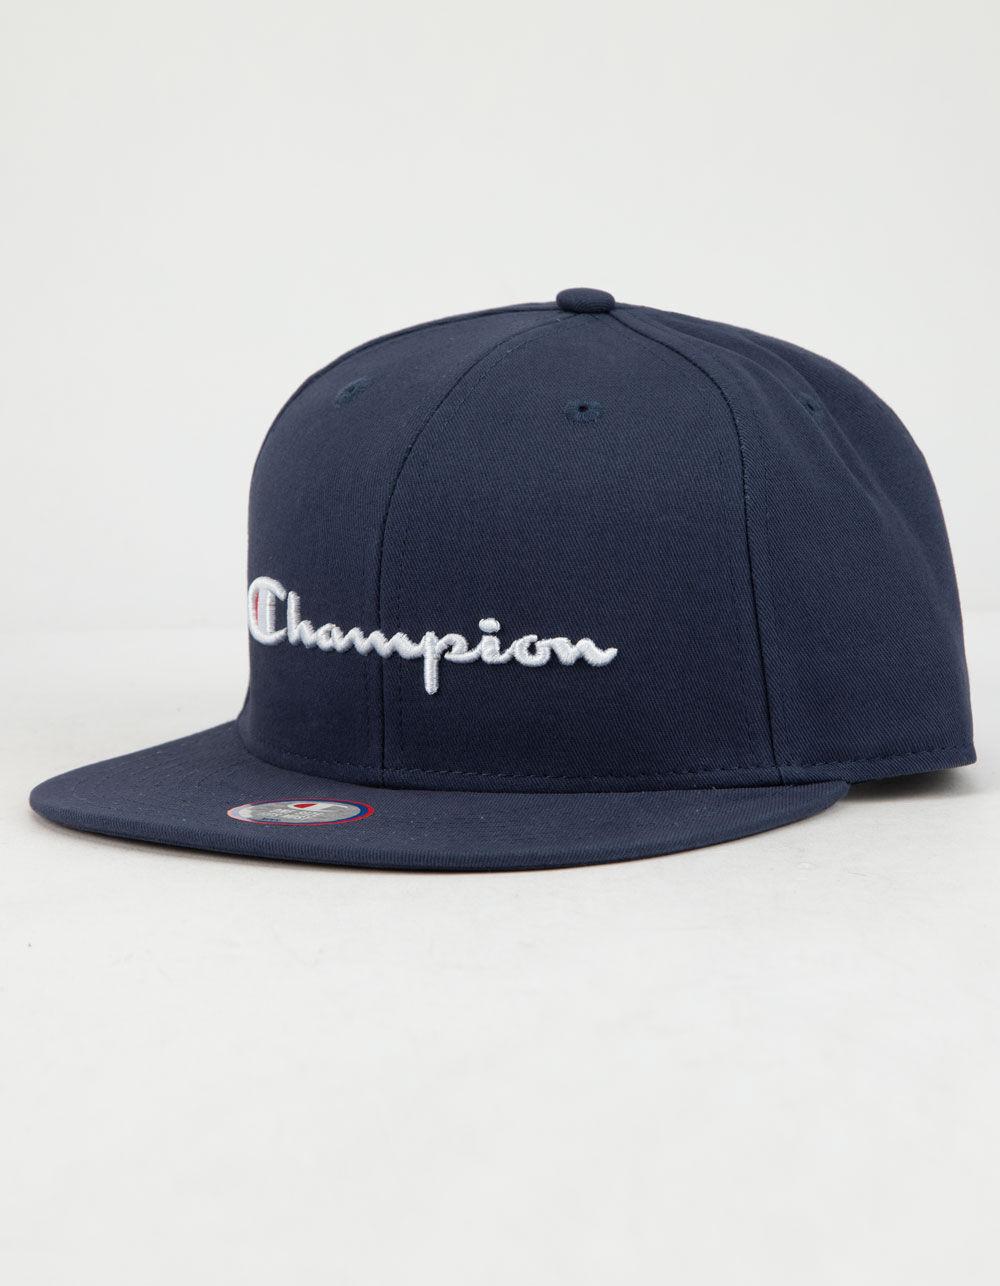 champion snapback hat